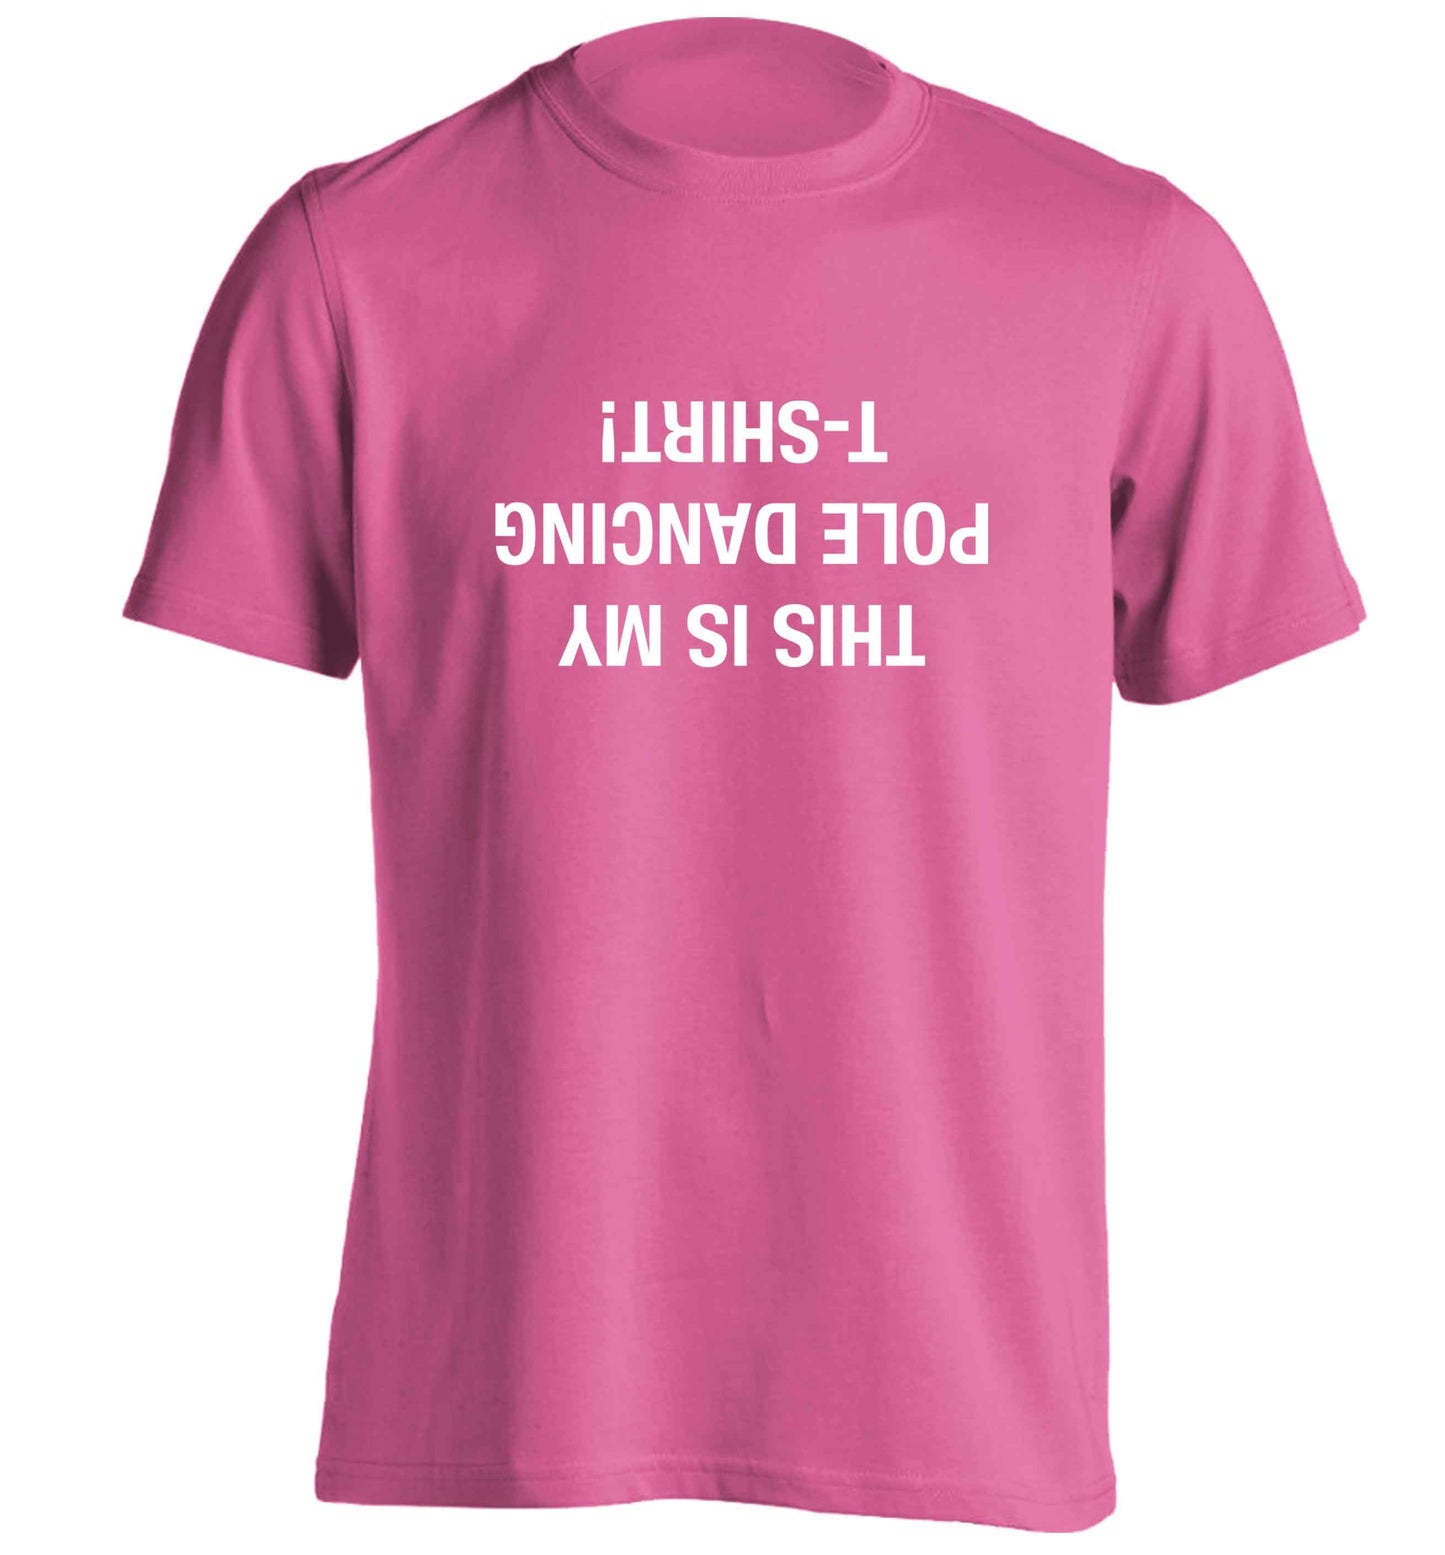 Best Things Happen Dancing adults unisex pink Tshirt 2XL